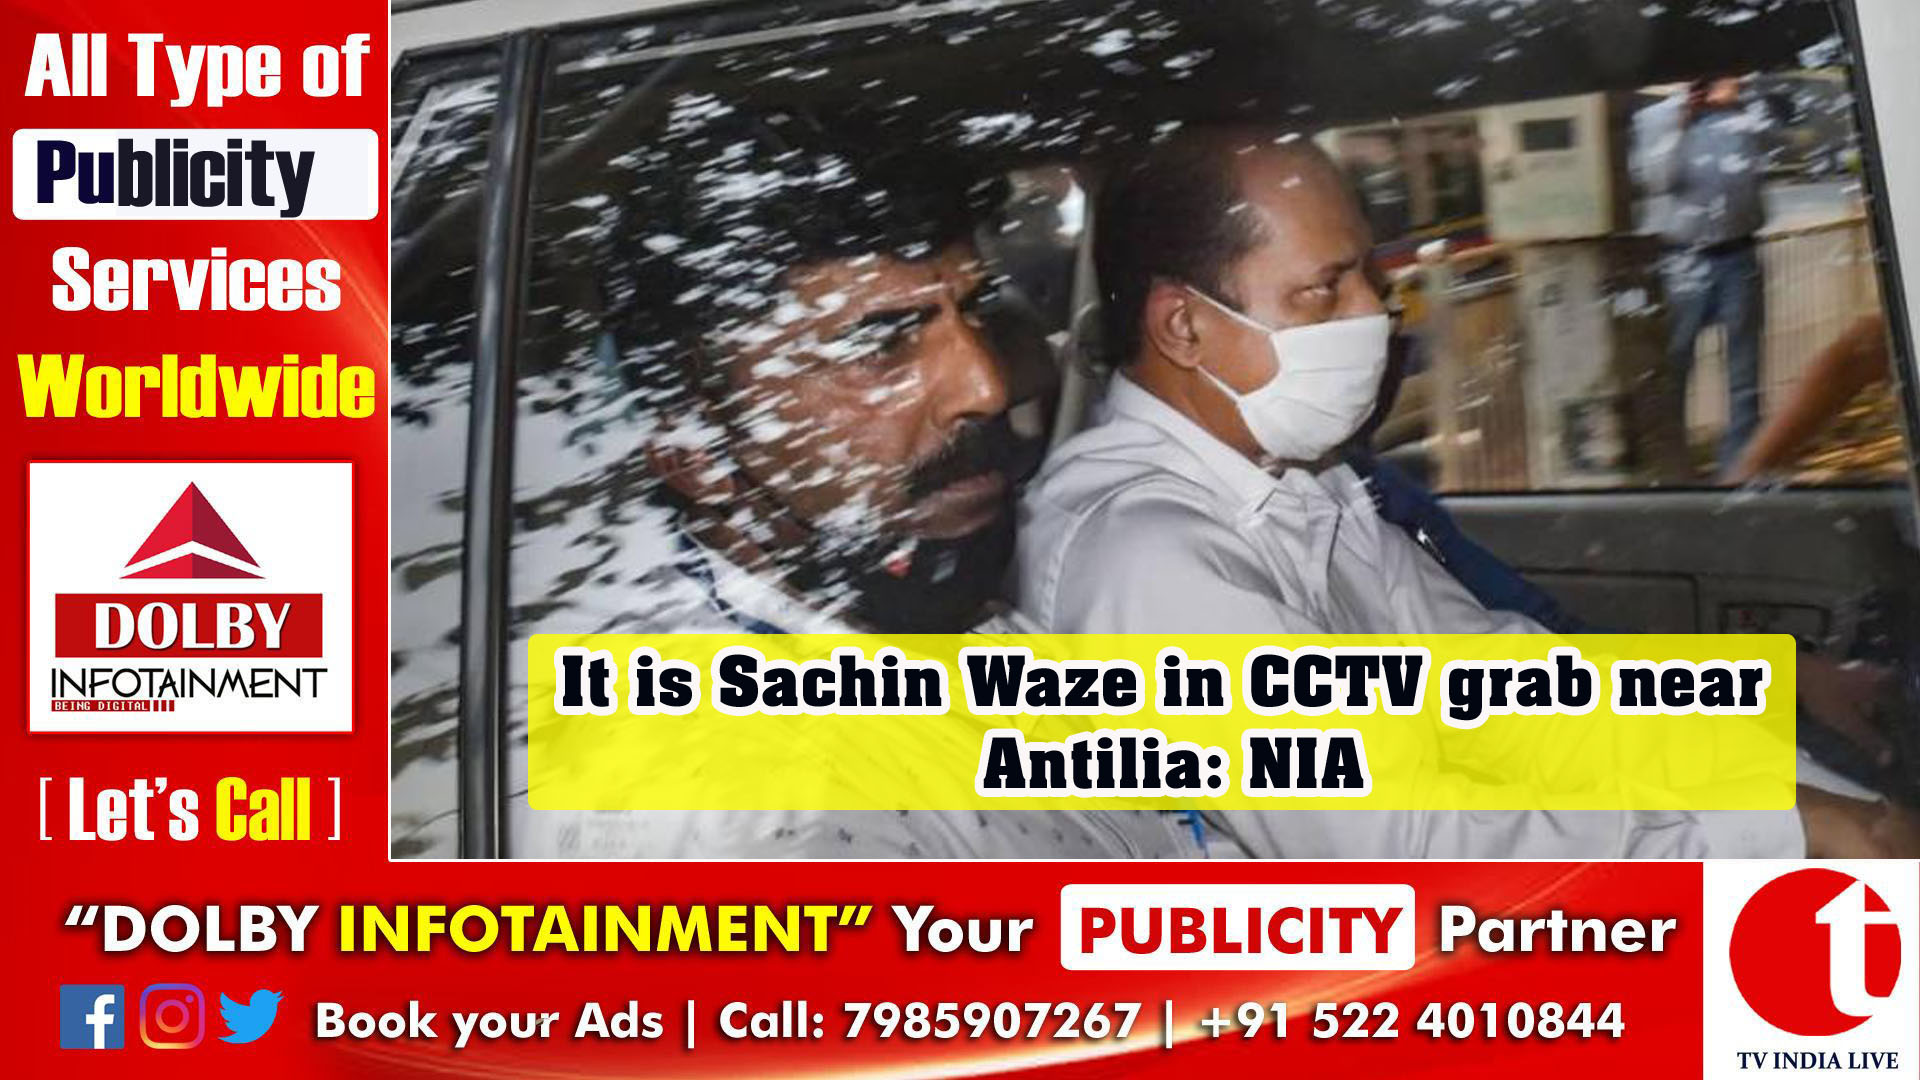 It is Sachin Waze in CCTV grab near Antilia: NIA